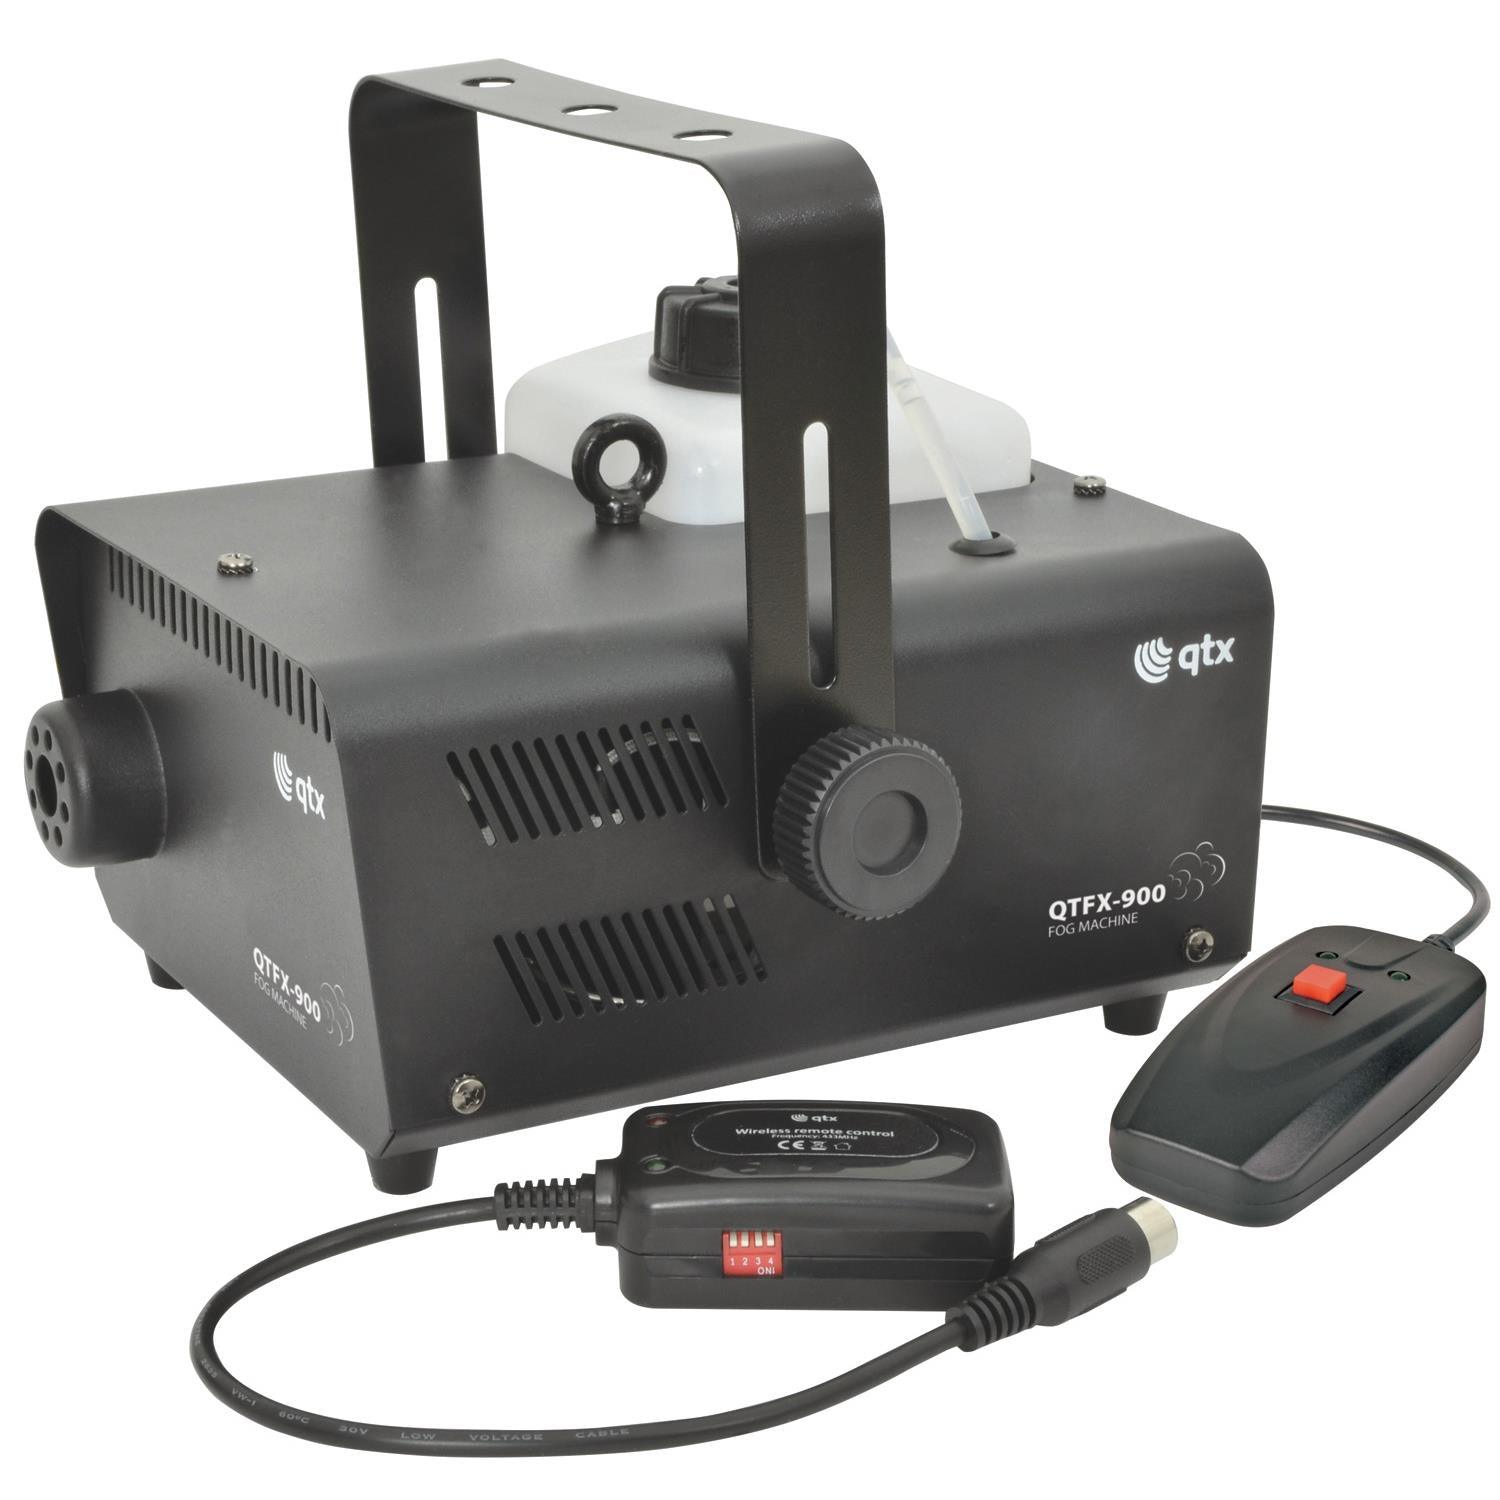 QTX QTFX-900 900W Fog Machine - DY Pro Audio